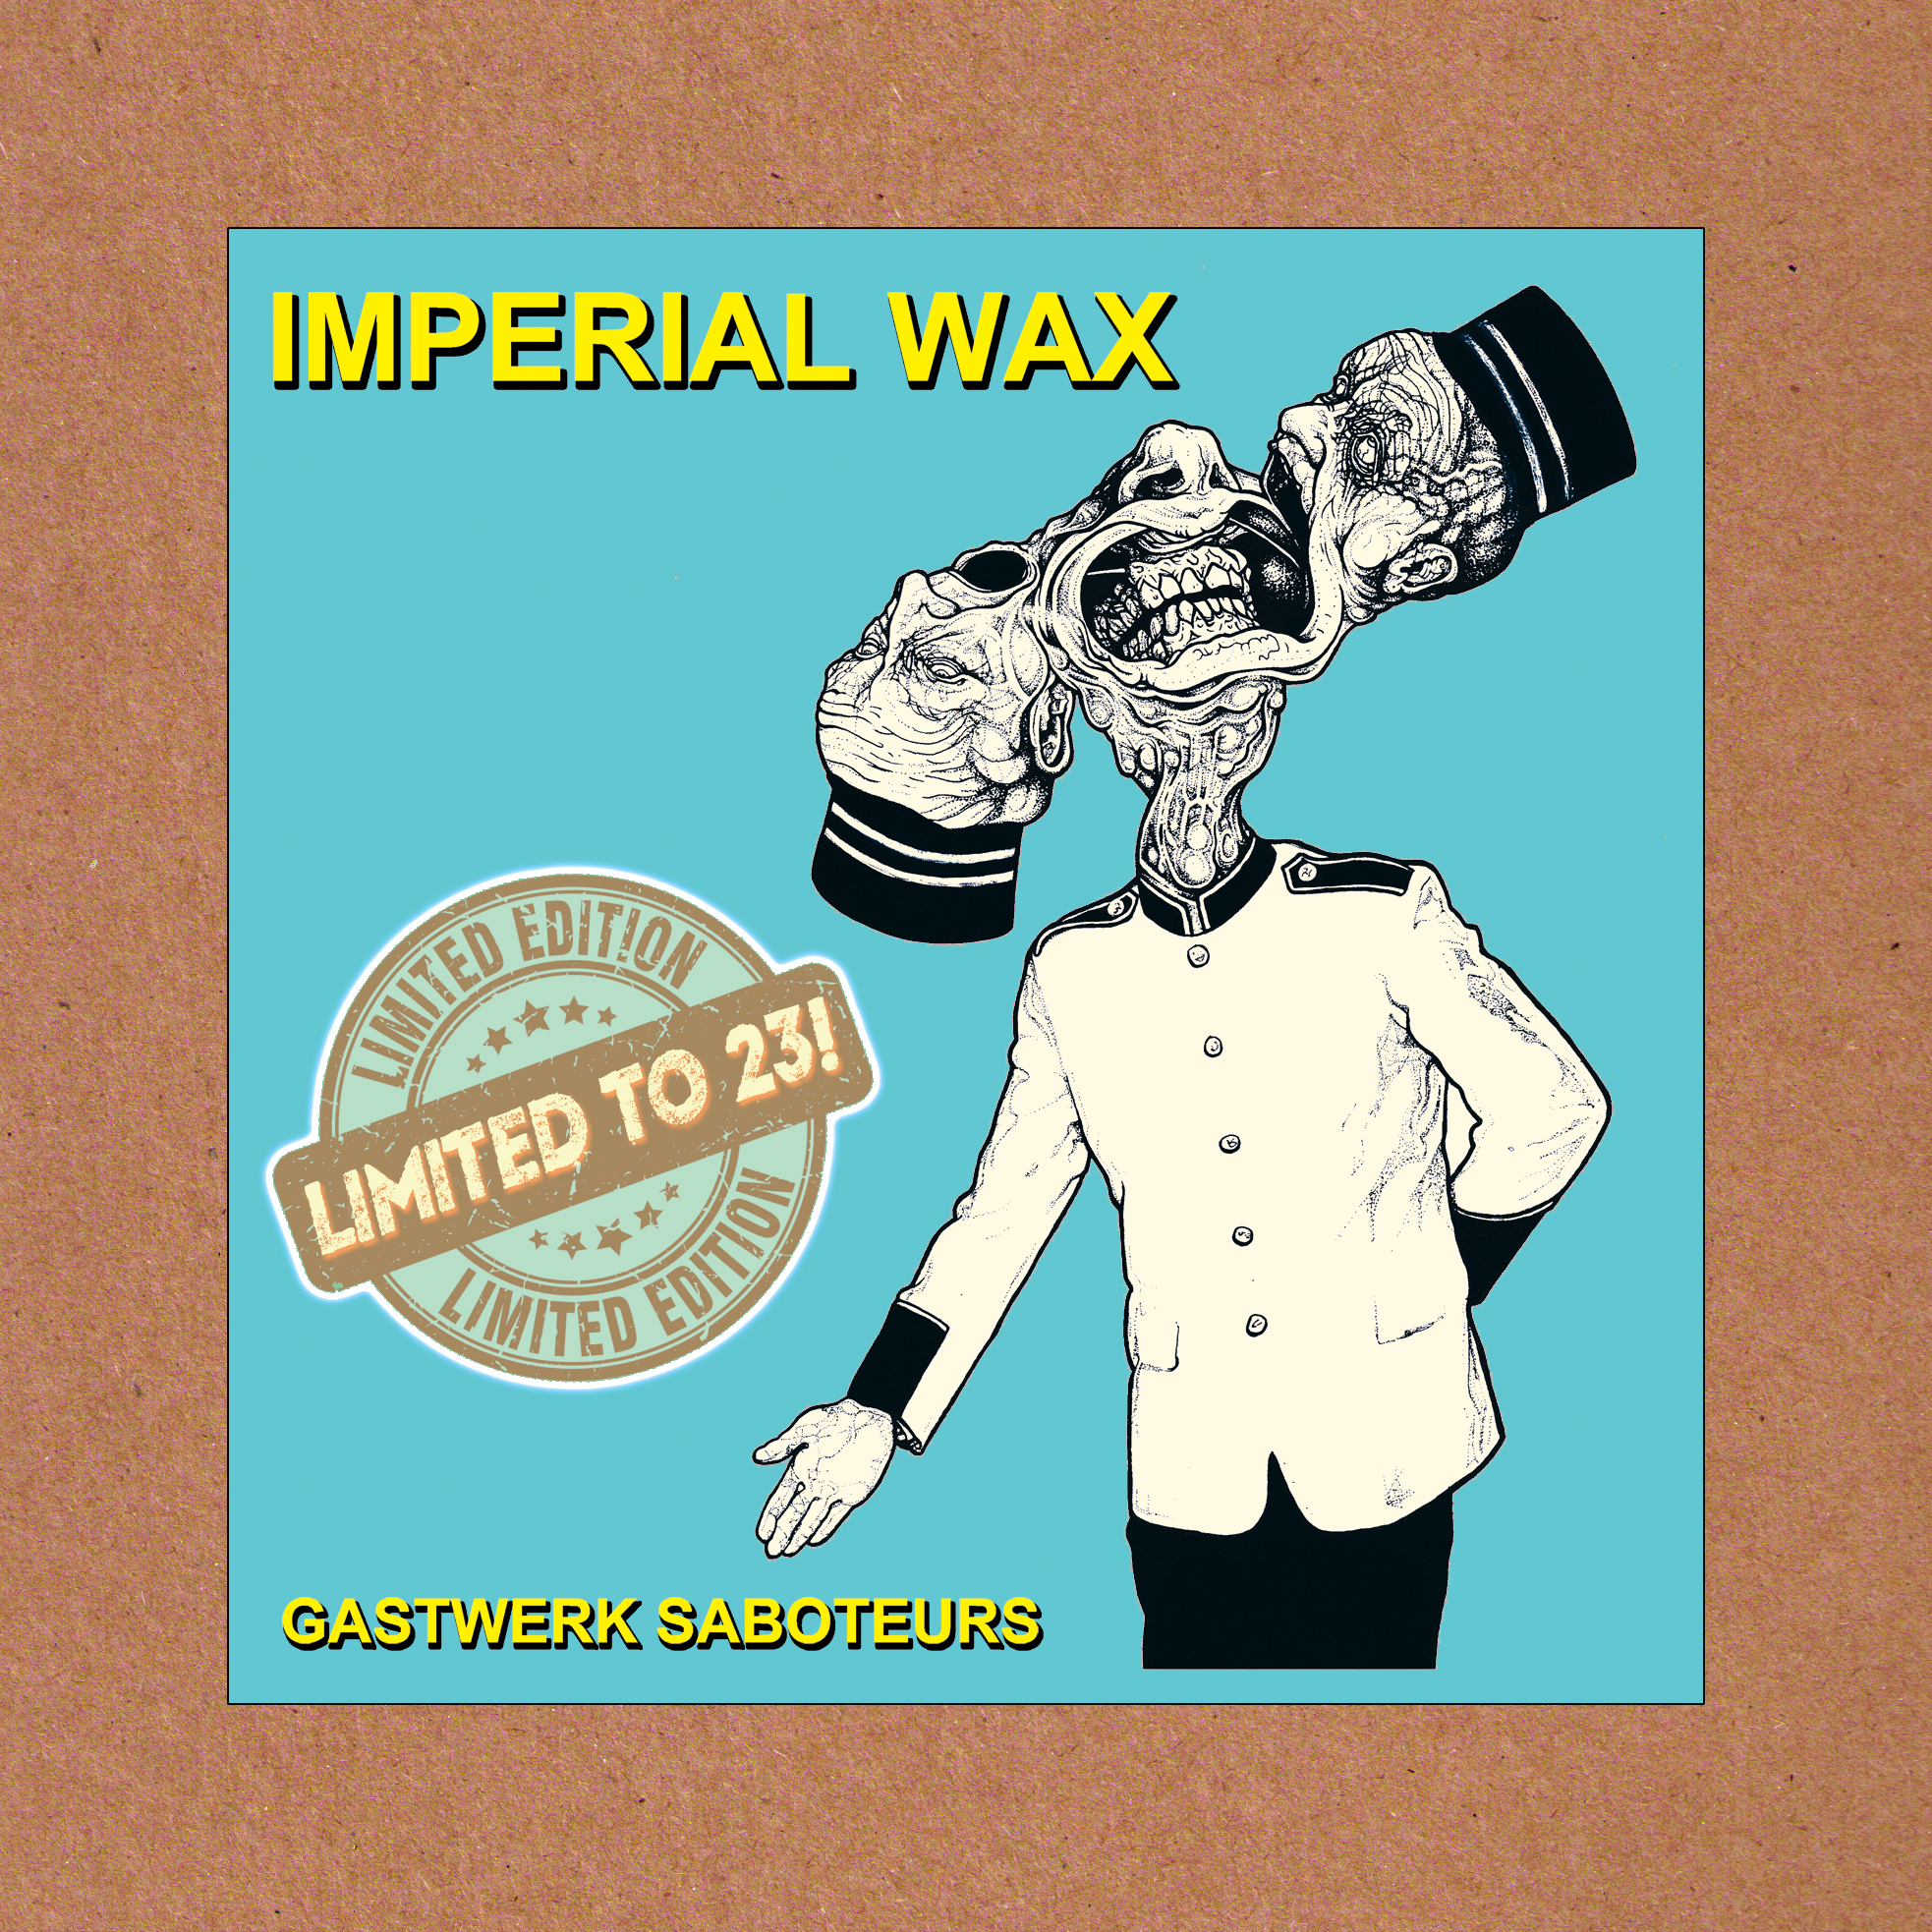 Imperial Wax- Gastwerk Saboteurs LP ~RARE ALT CVR LTD TO 23 NUMBERED ON YELLOW WAX / EX THE FALL!